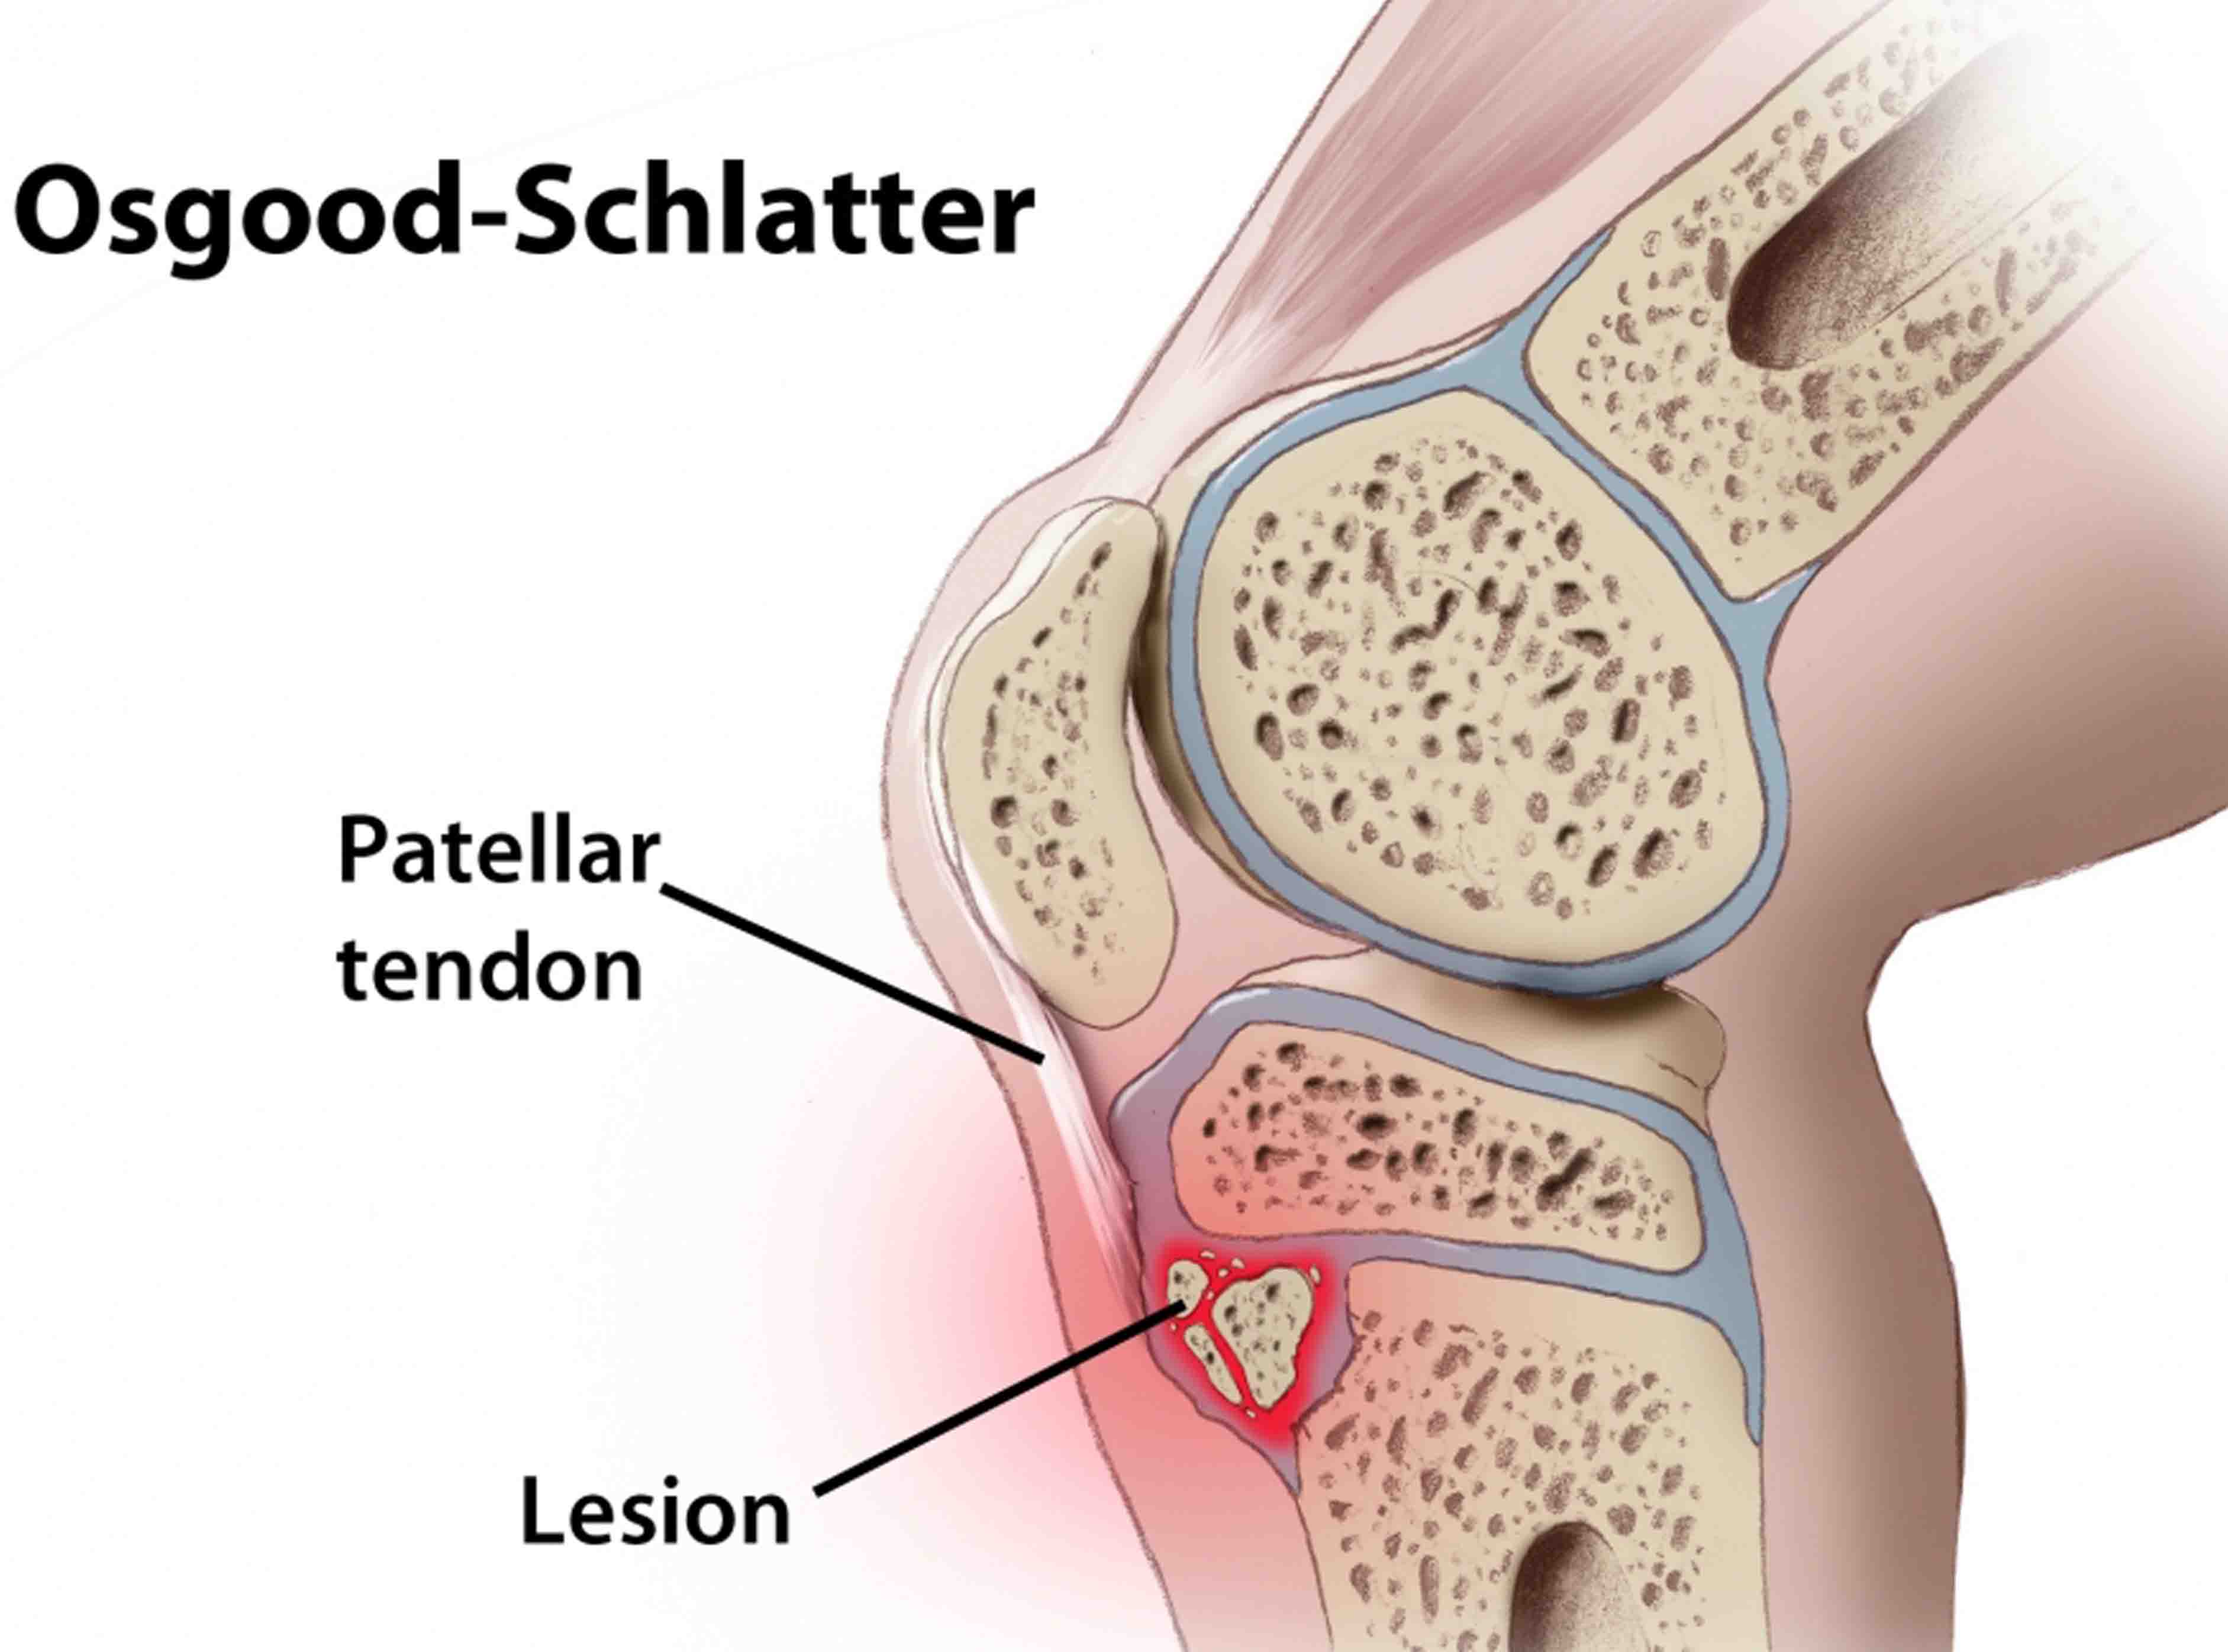 Osood-Schlatters Knee Pain - Anatomy Diagram - Lisa Howell - The Ballet Blog